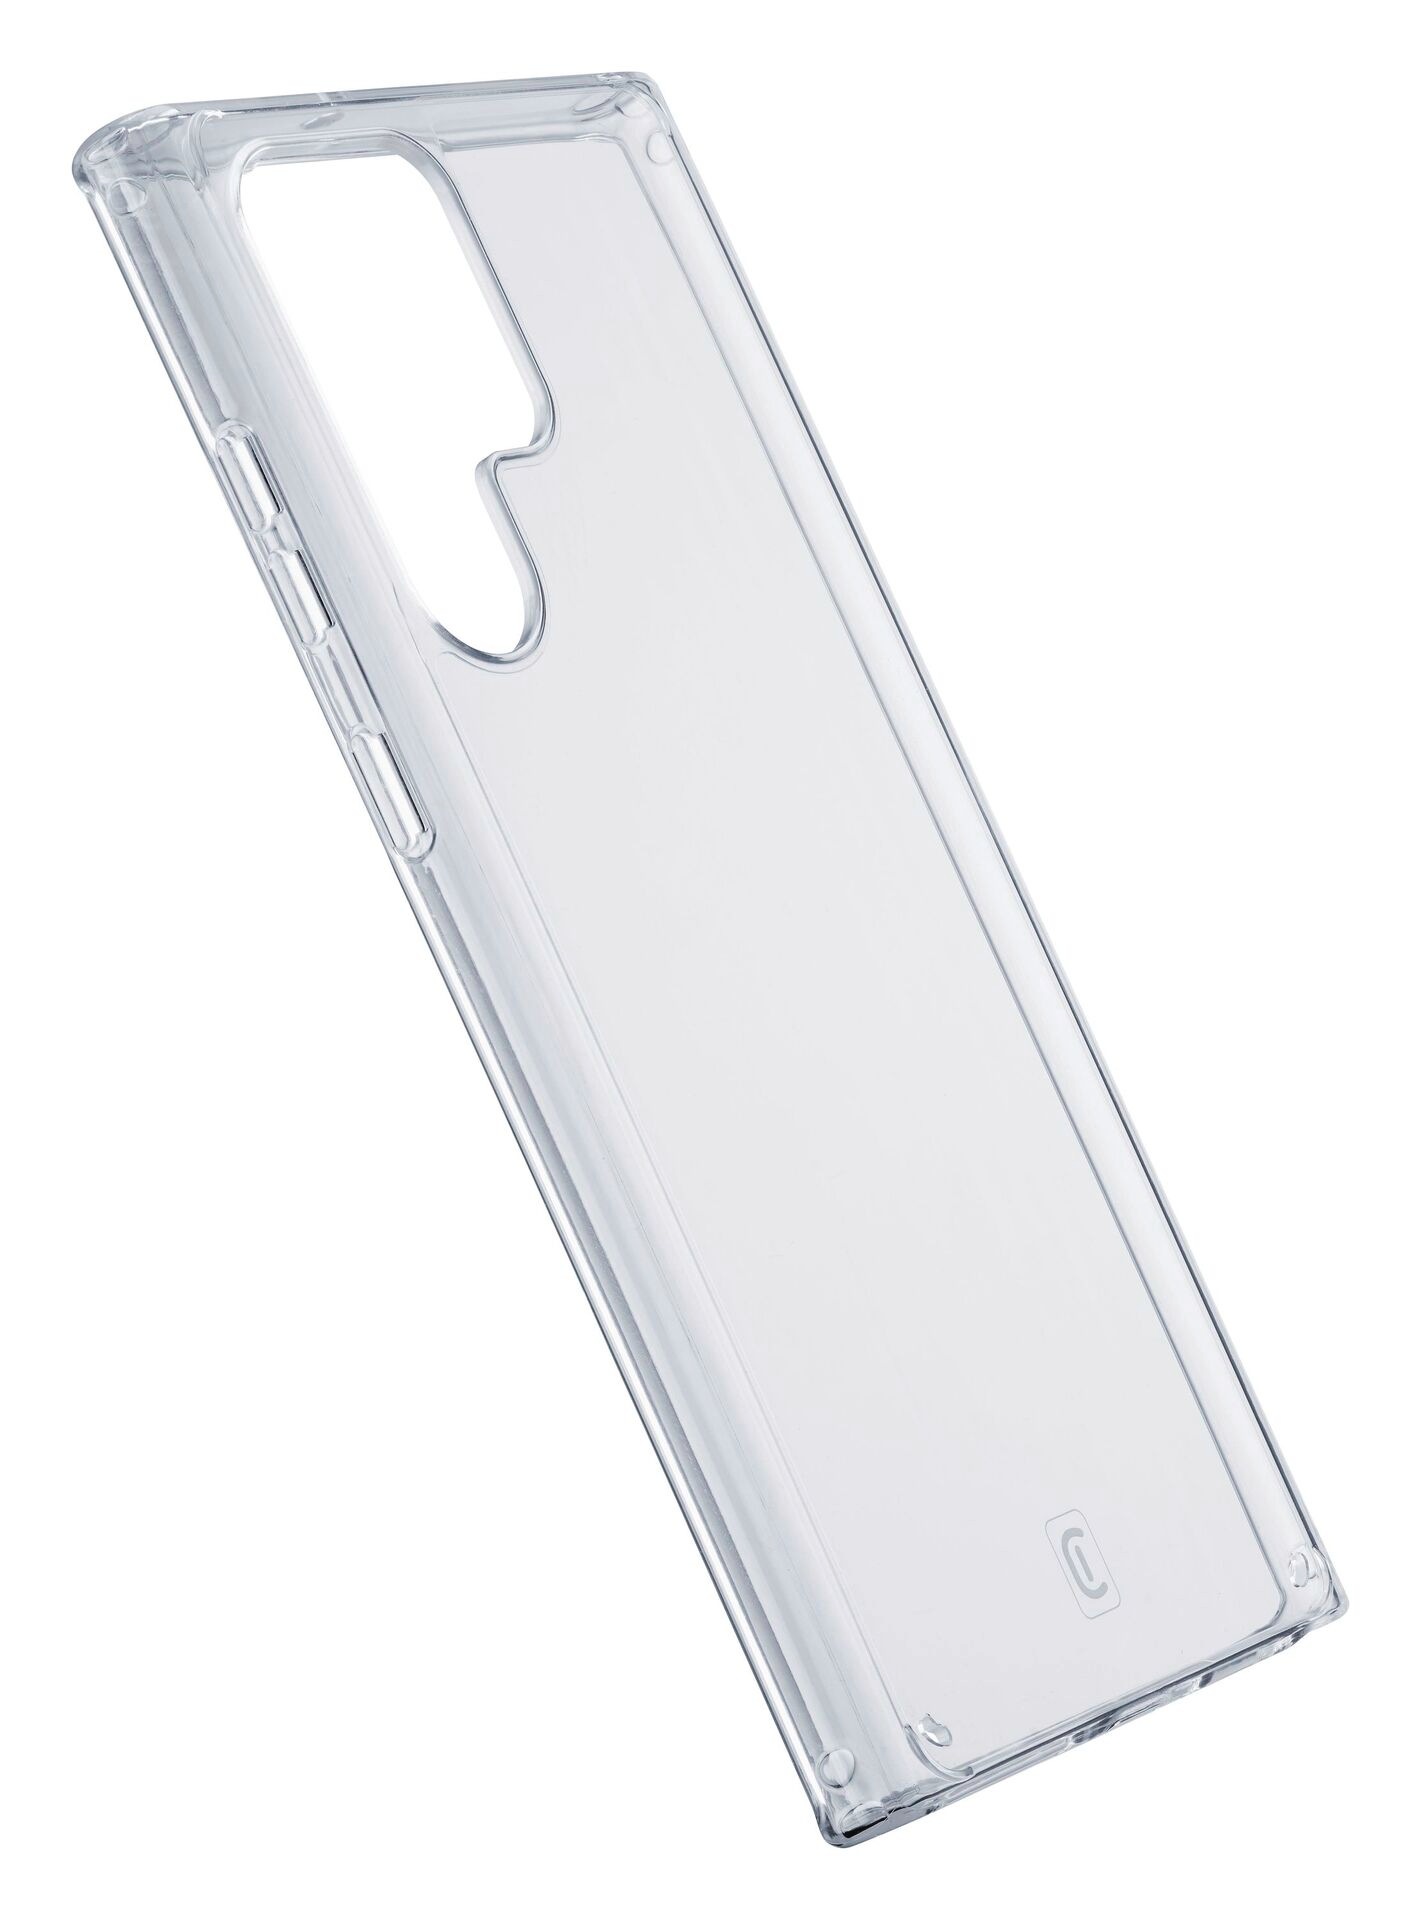 Cellularline Handyhülle »Clear Strong Case für Samsung Galaxy S24 Ultra«, Handycover Backcover Schutzhülle Handyschutzhülle stoßfest kratzfest